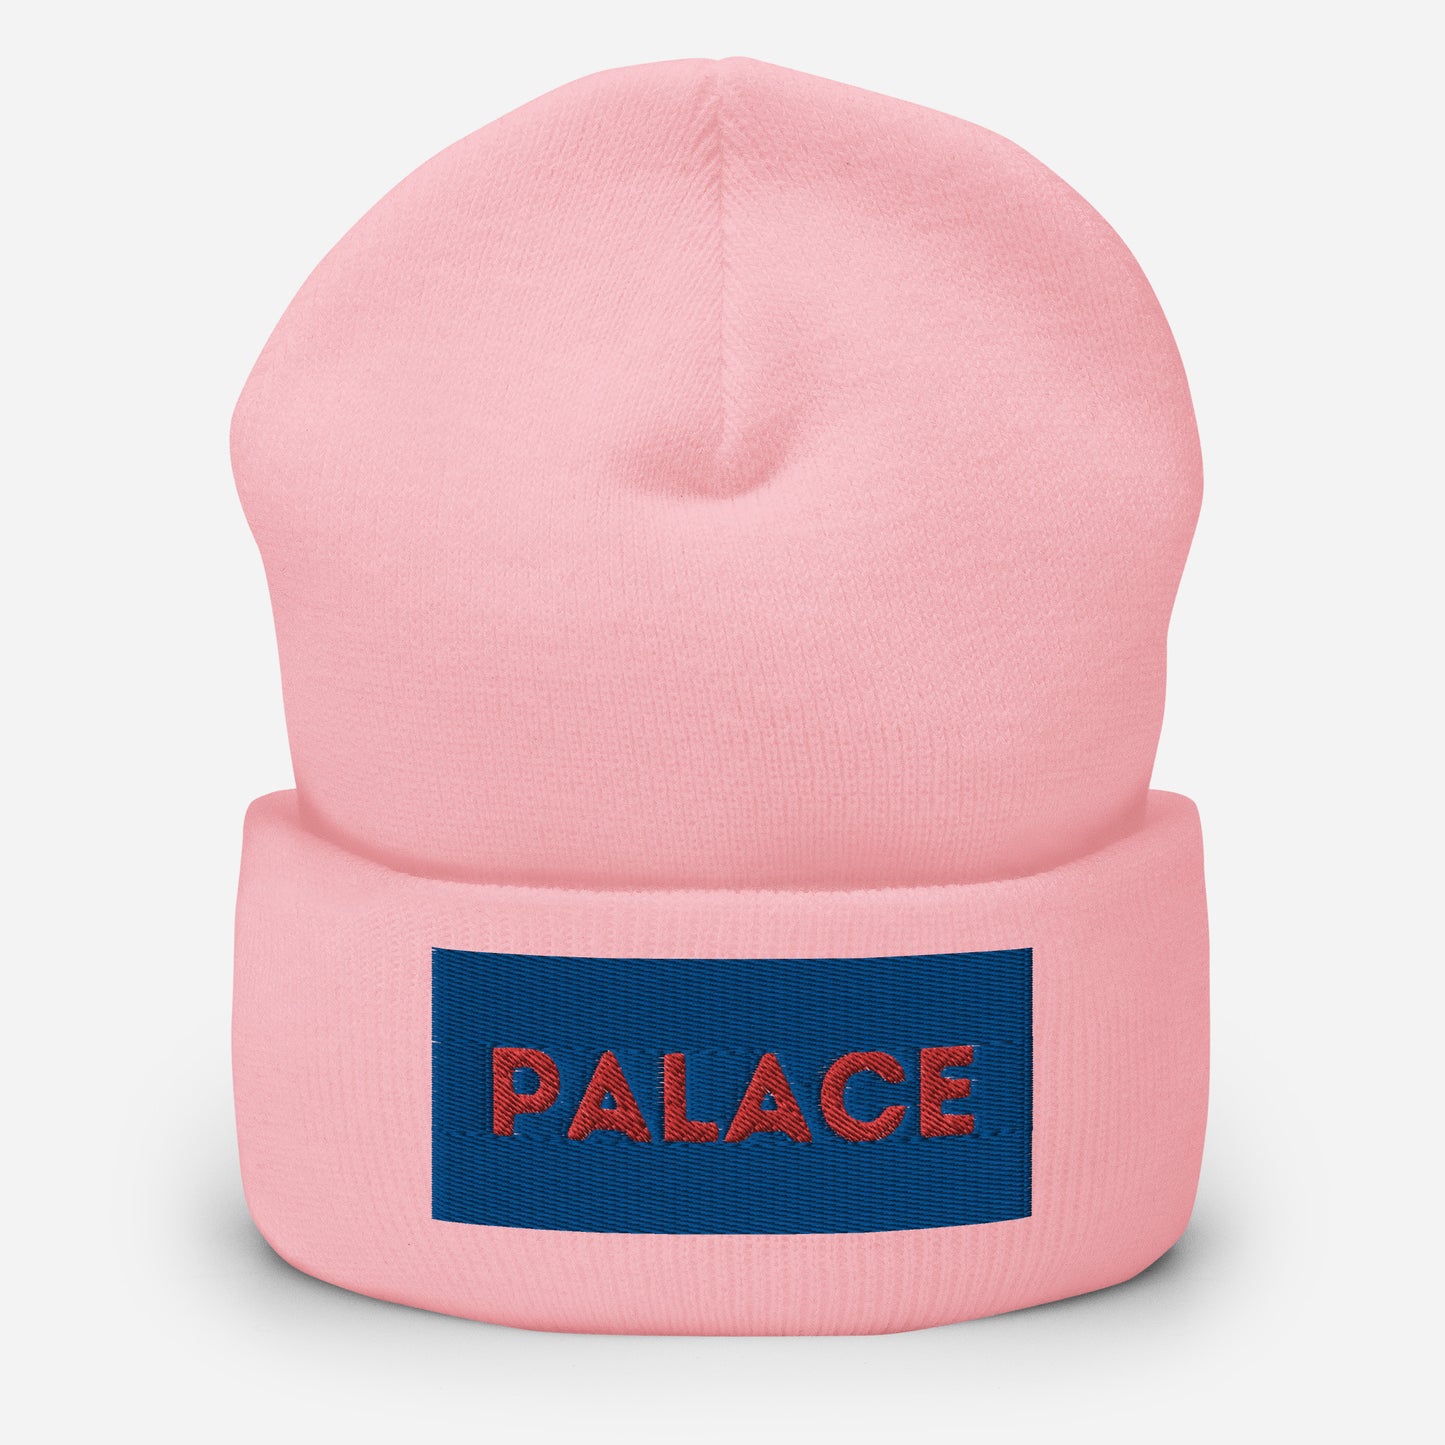 Palace Cuffed Beanie Hat